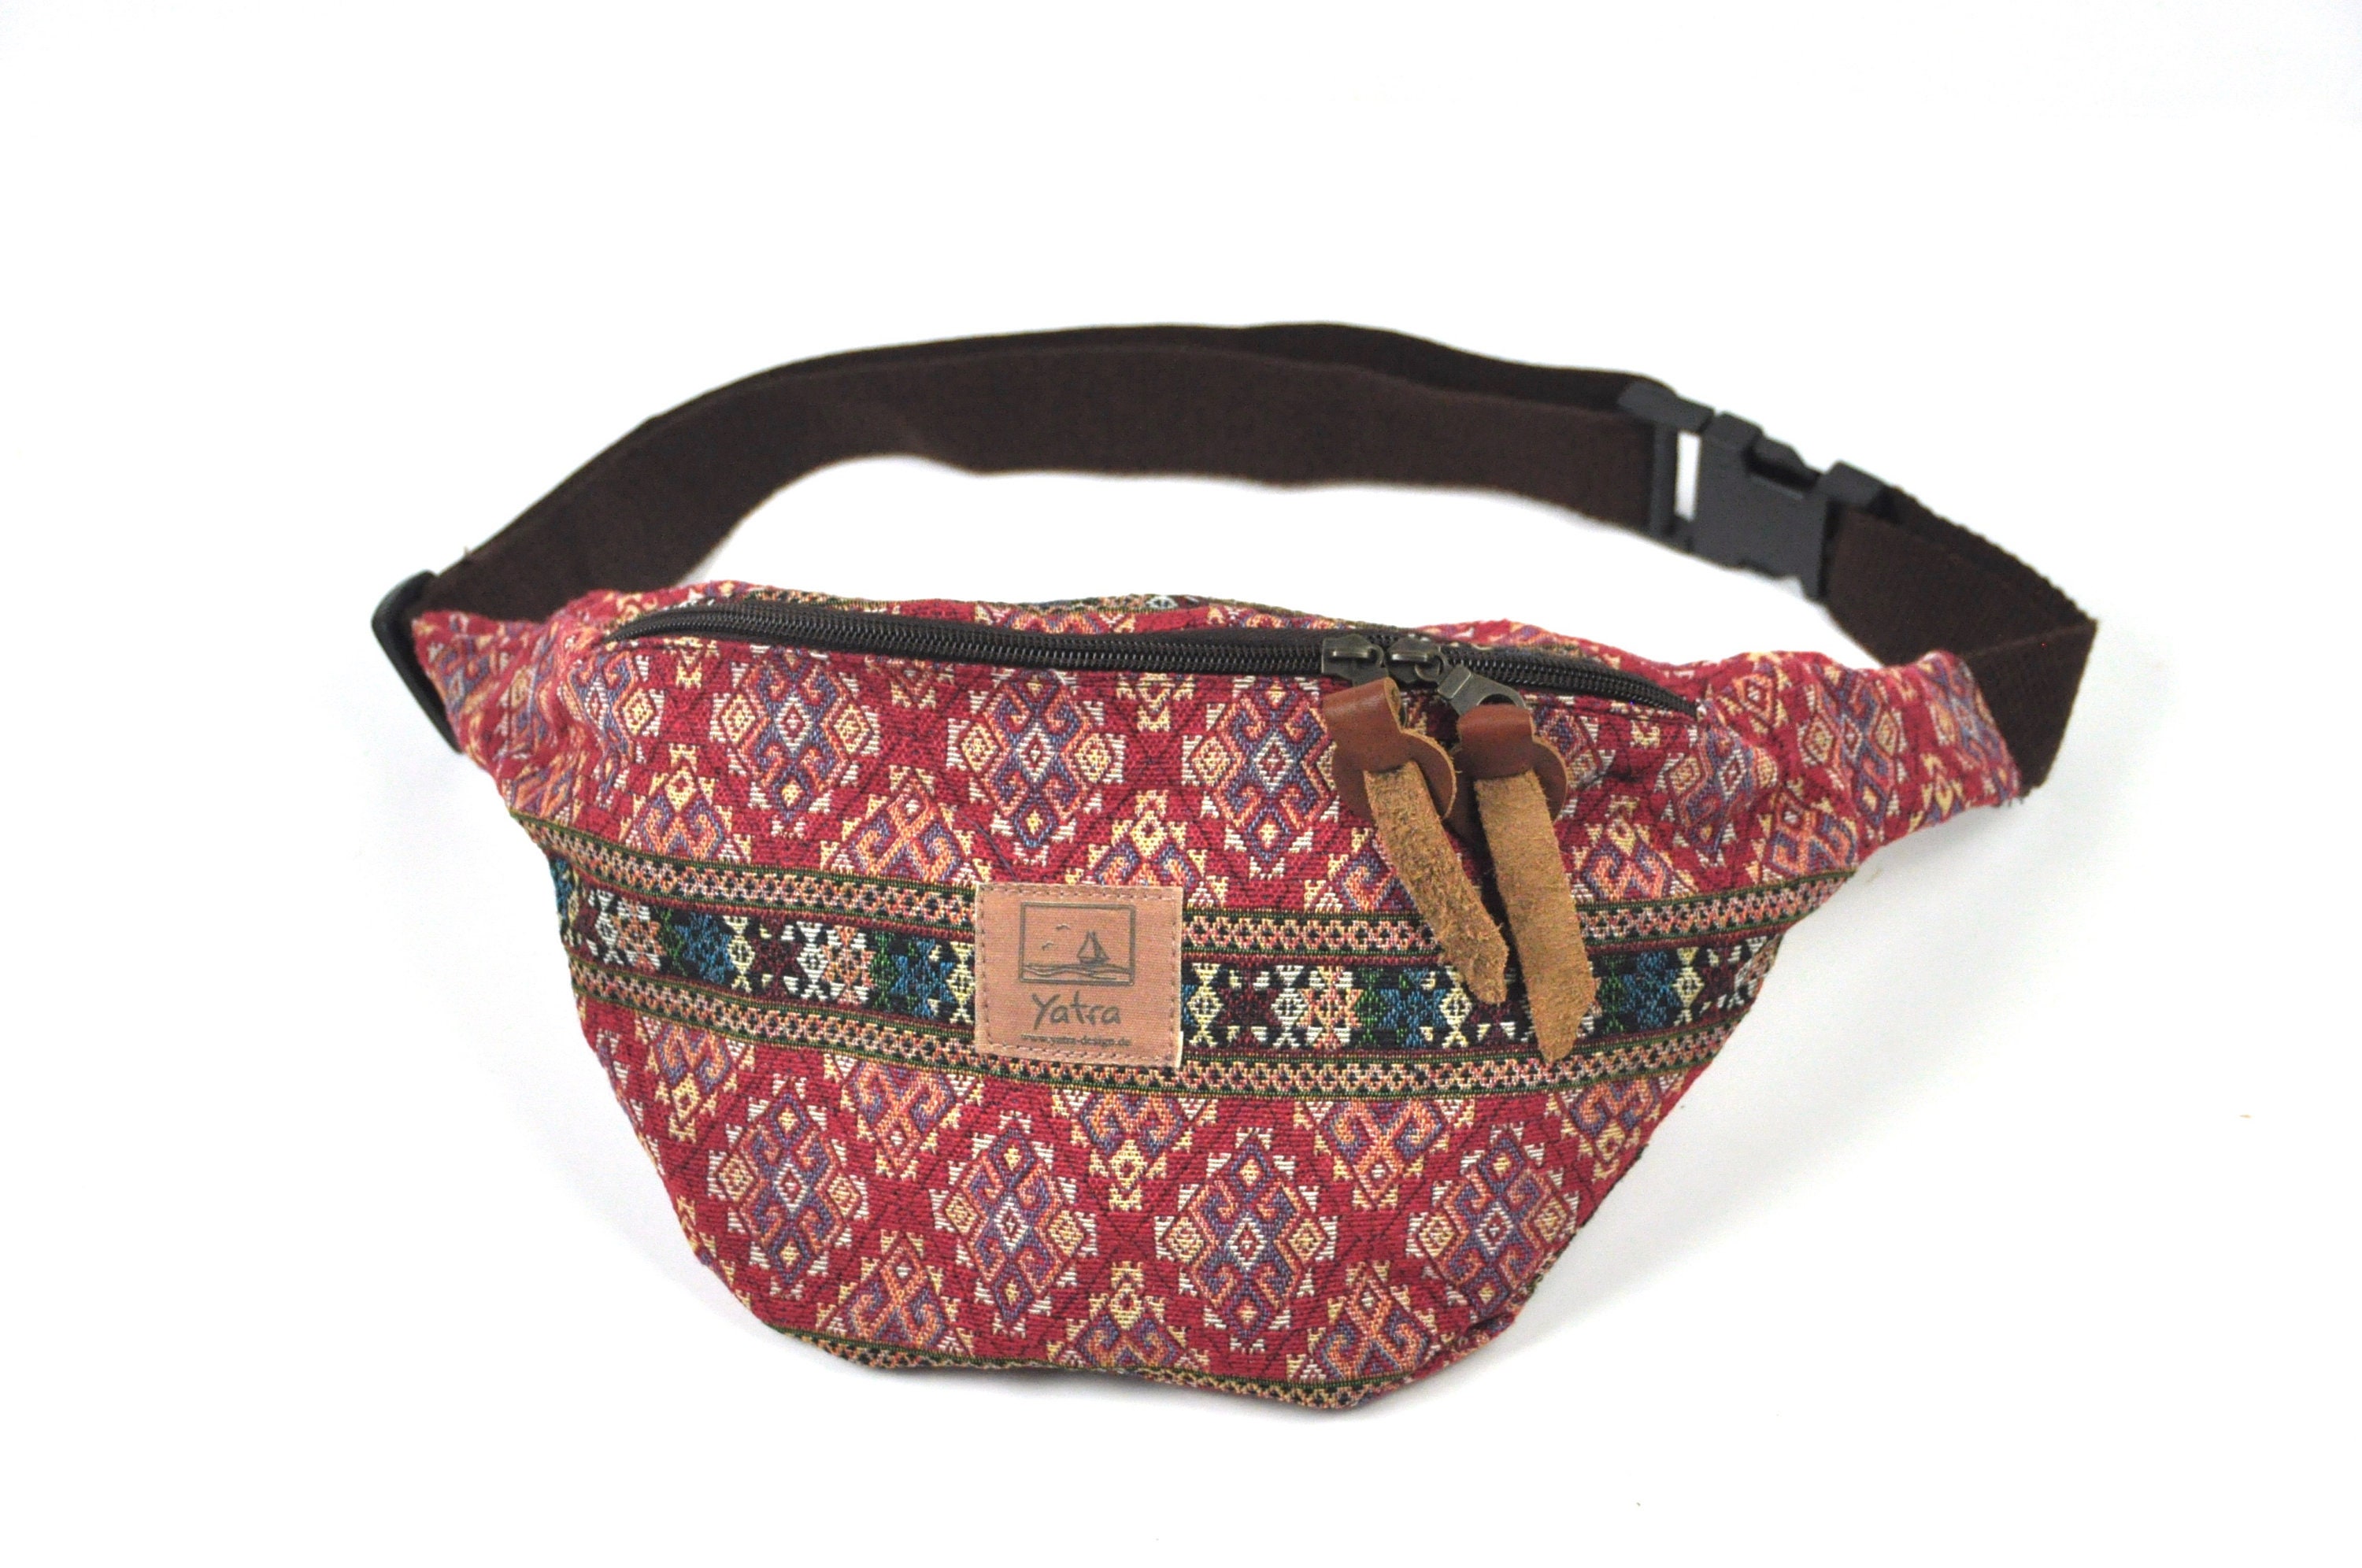 Fanny pack hip bag tribal pattern boho fanny pack | Etsy